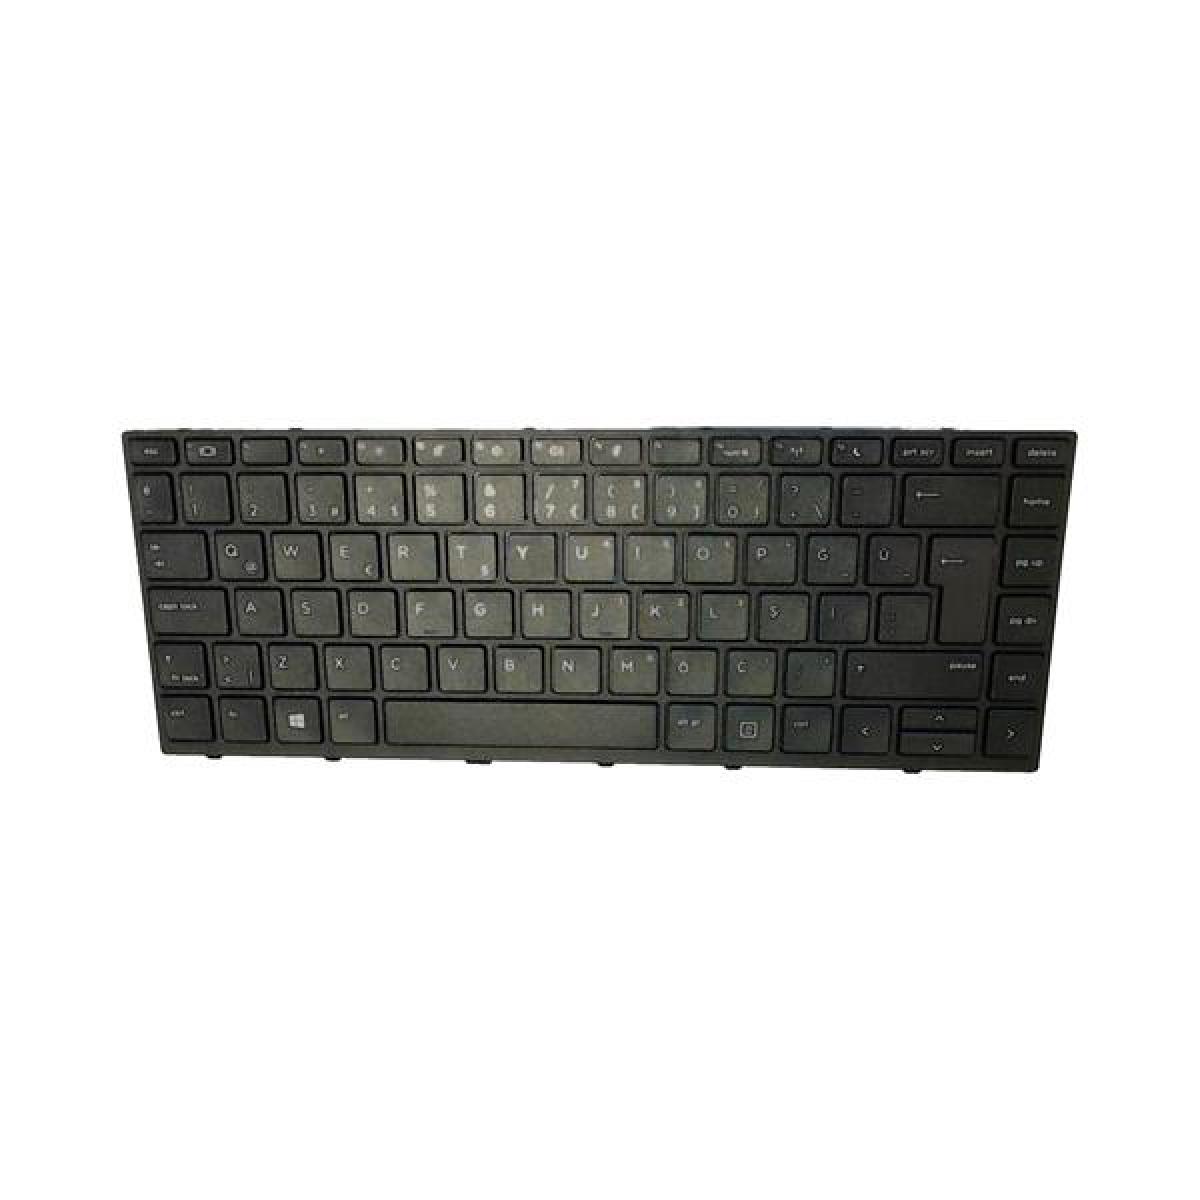 HP Notebook Keyboard x360 440 G1 Turkey